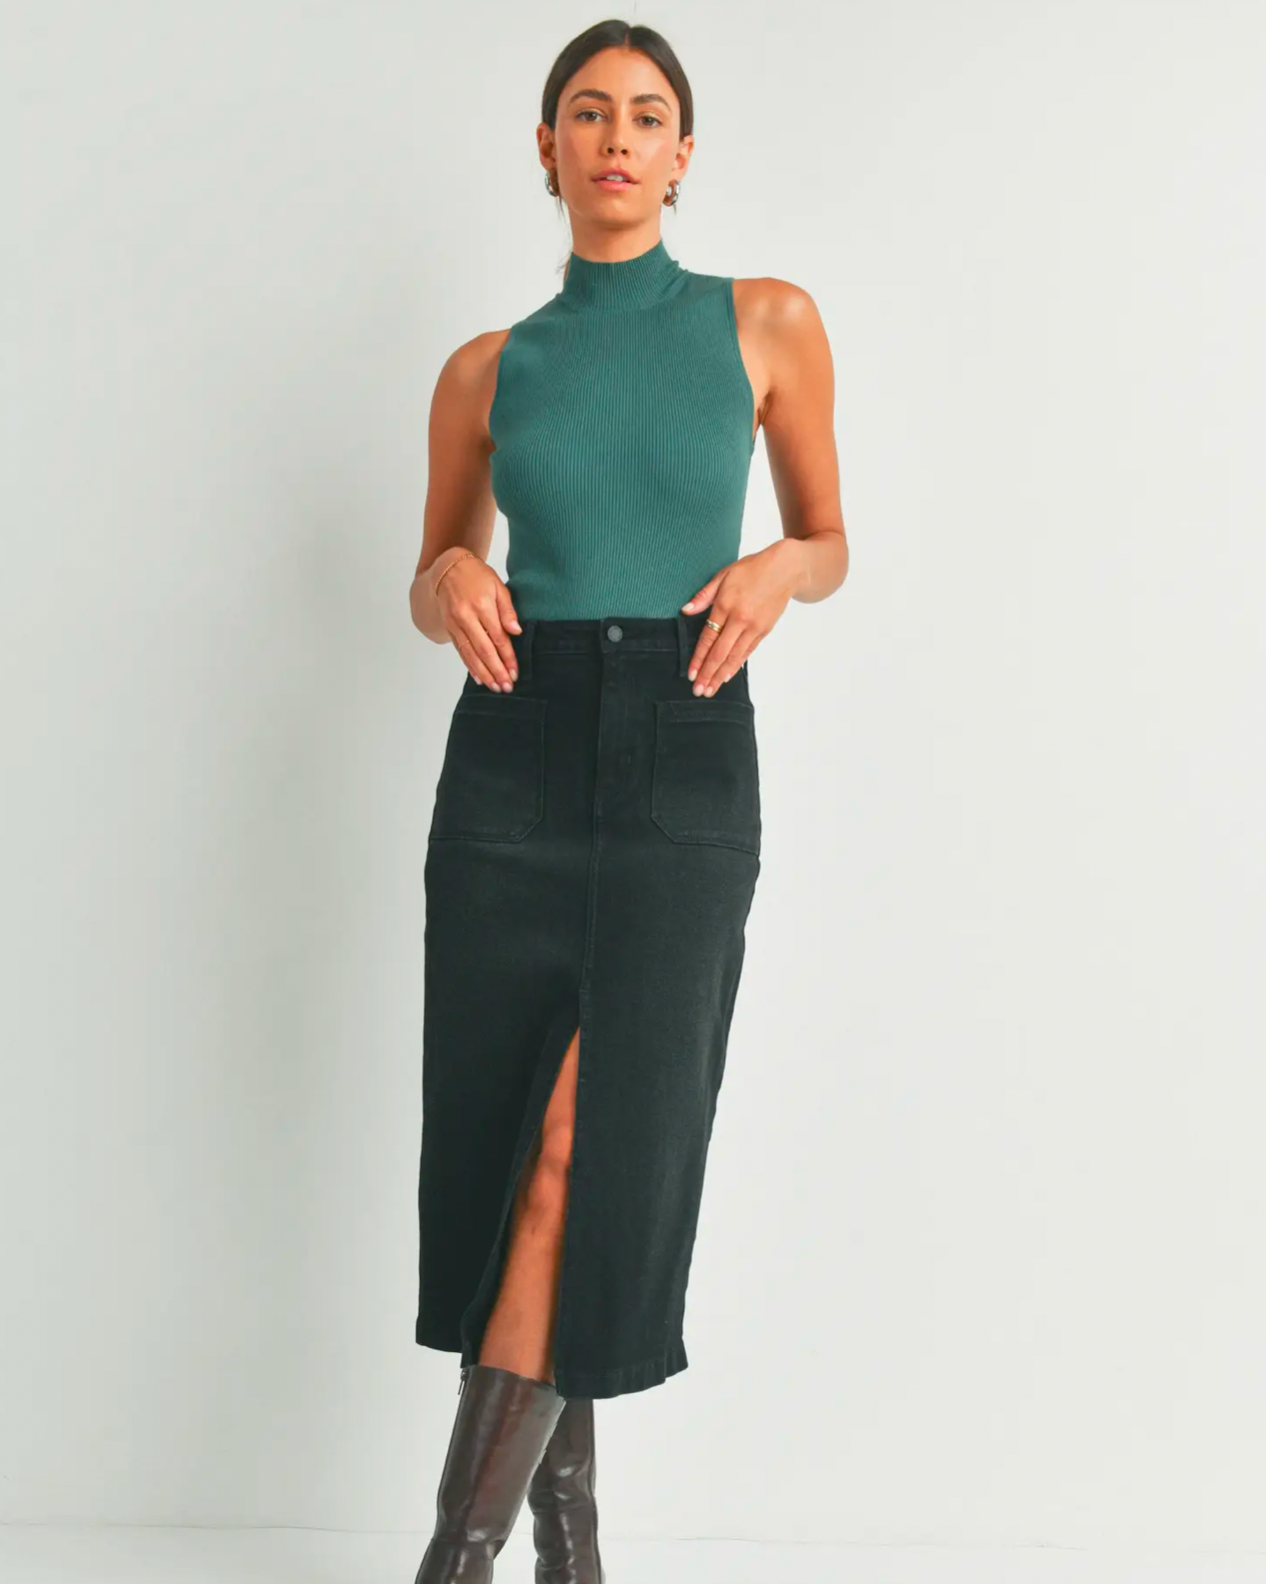 Model wearing Just Black Denim Black utility pocket midi denim skirt in wearing green tank top on a white background